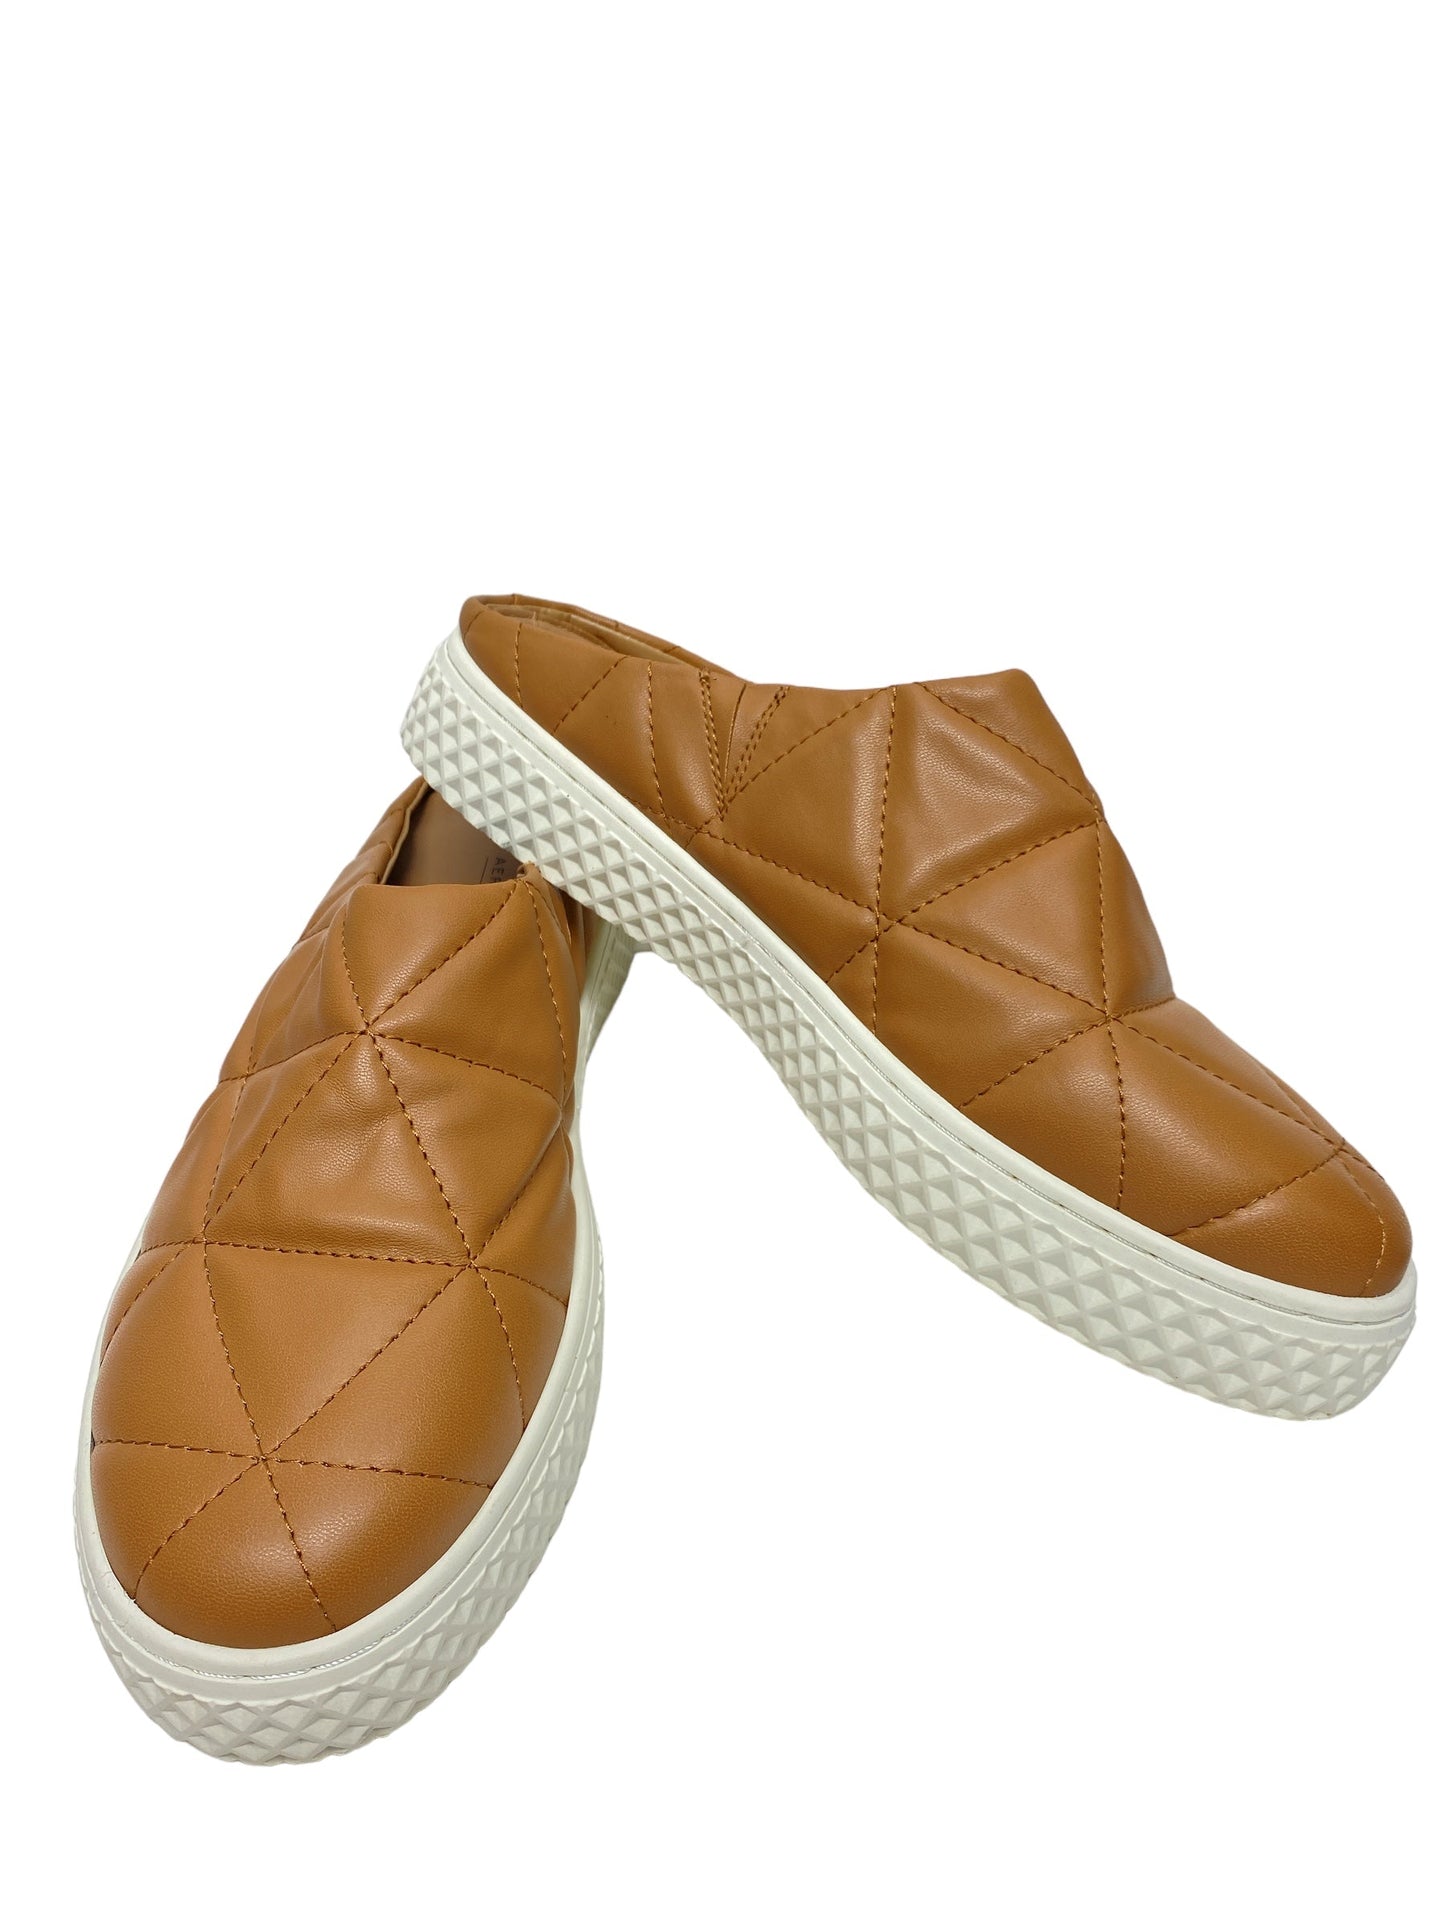 Brown Shoes Flats Aerosoles, Size 8